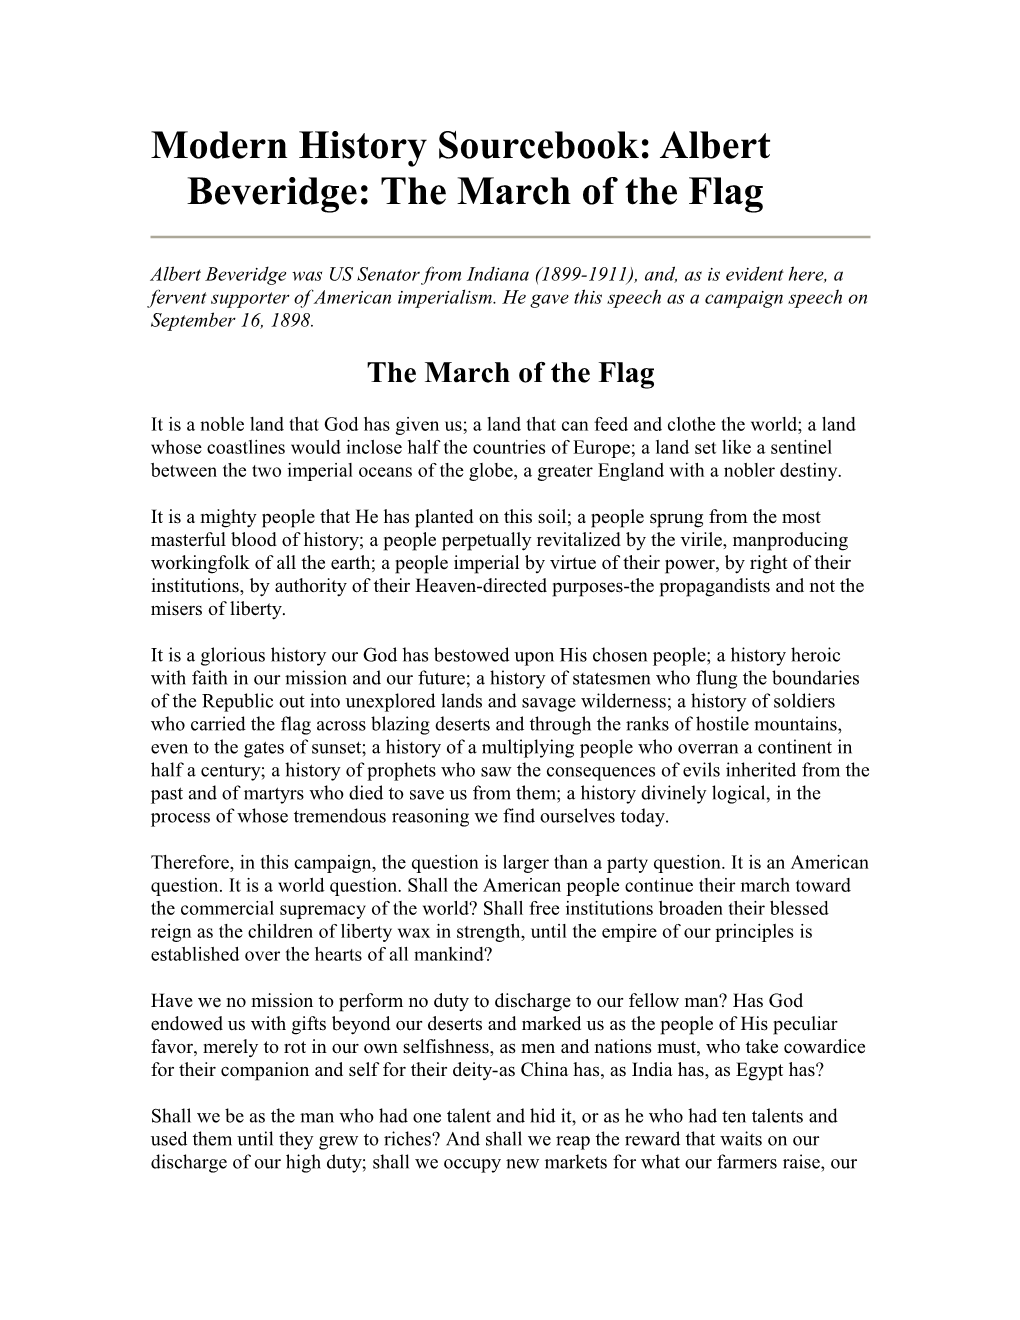 Modern History Sourcebook: Albert Beveridge: the March of the Flag